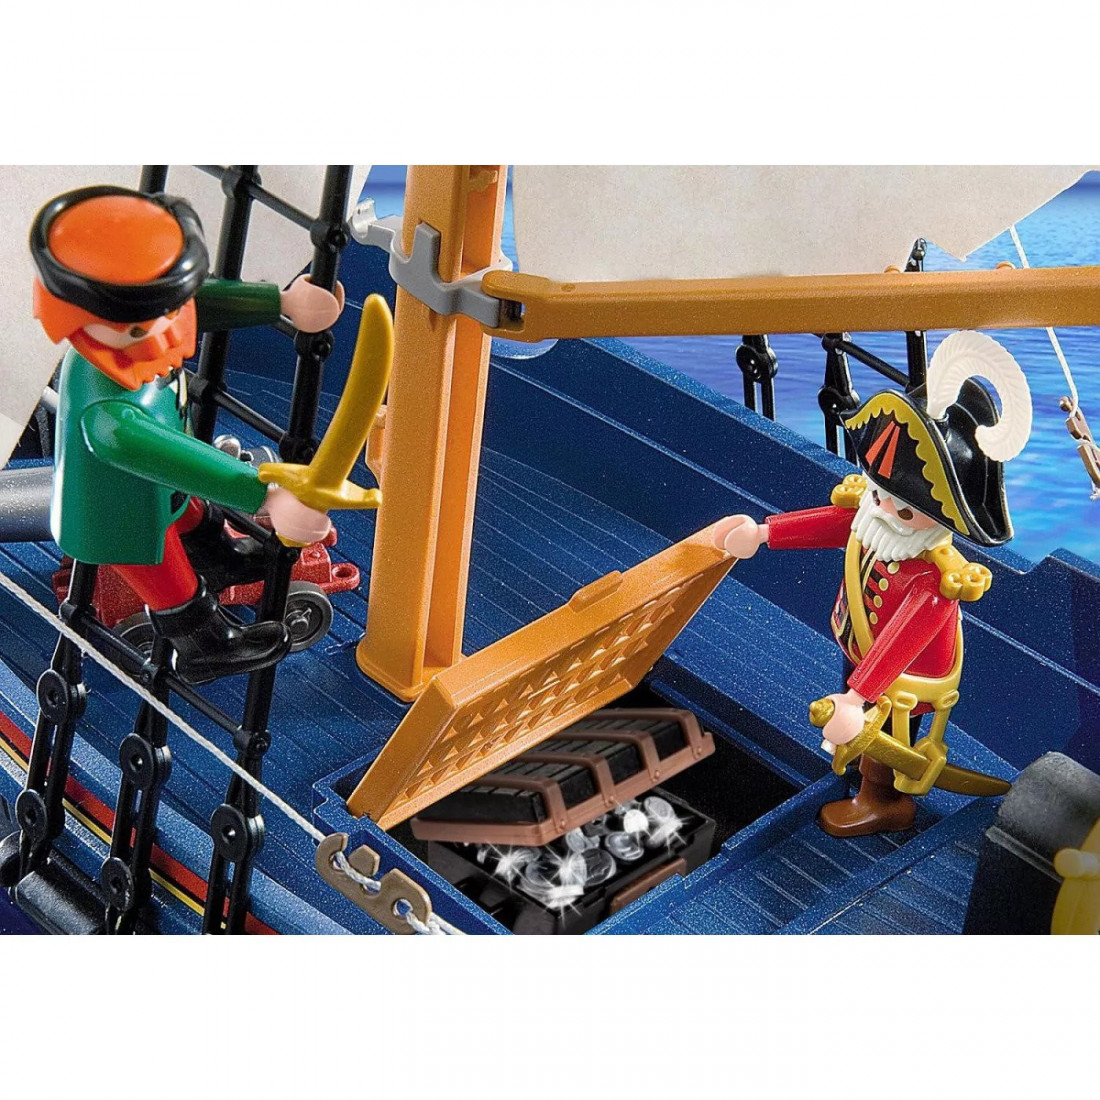 Pirates Κουρσάρικη Σκούνα 5810 Playmobil